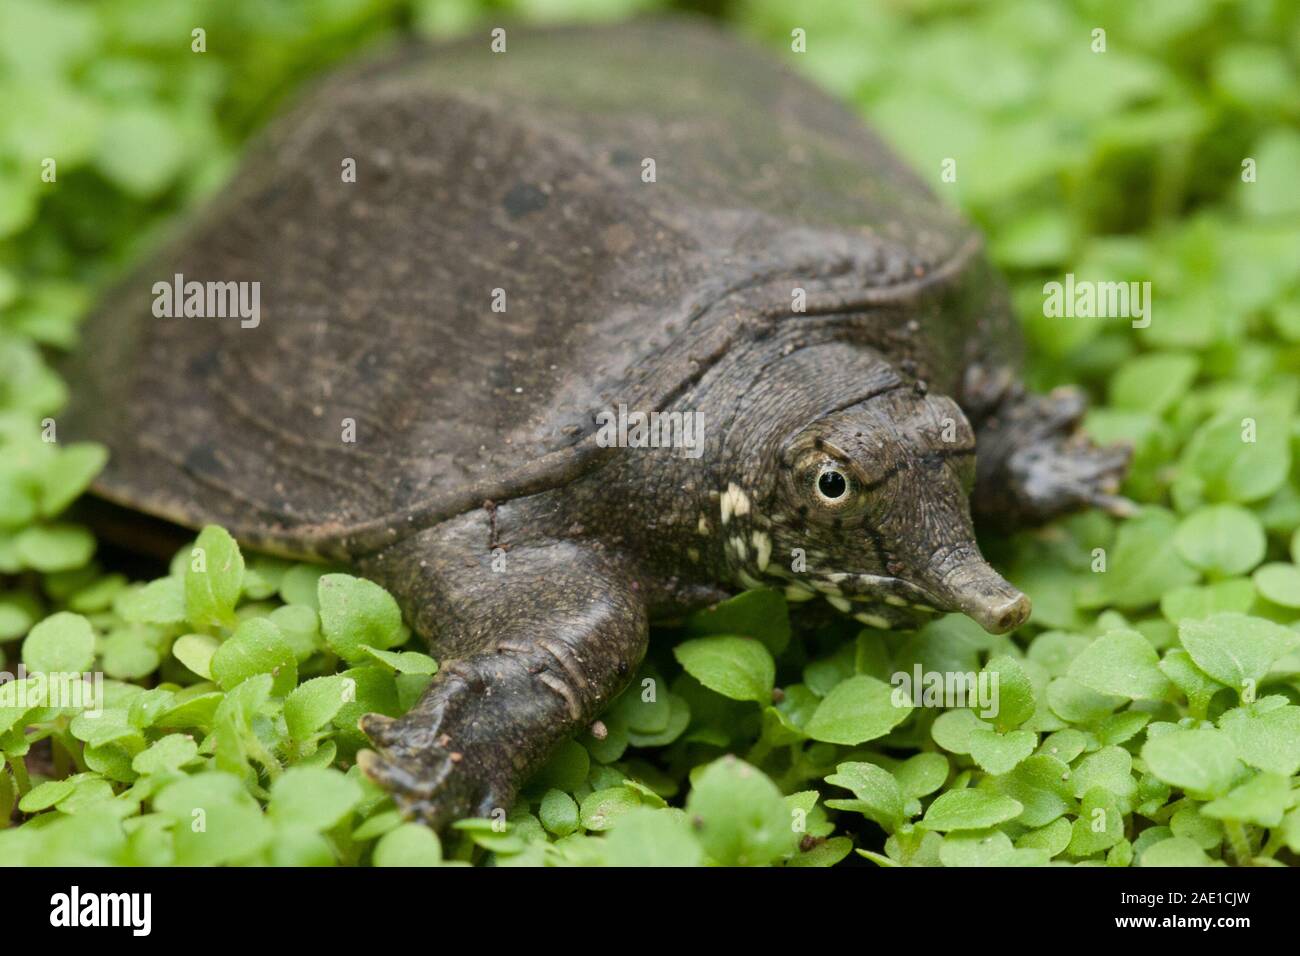 Common softshell turtle or asiatic softshell turtle (Amyda cartilaginea  Stock Photo - Alamy